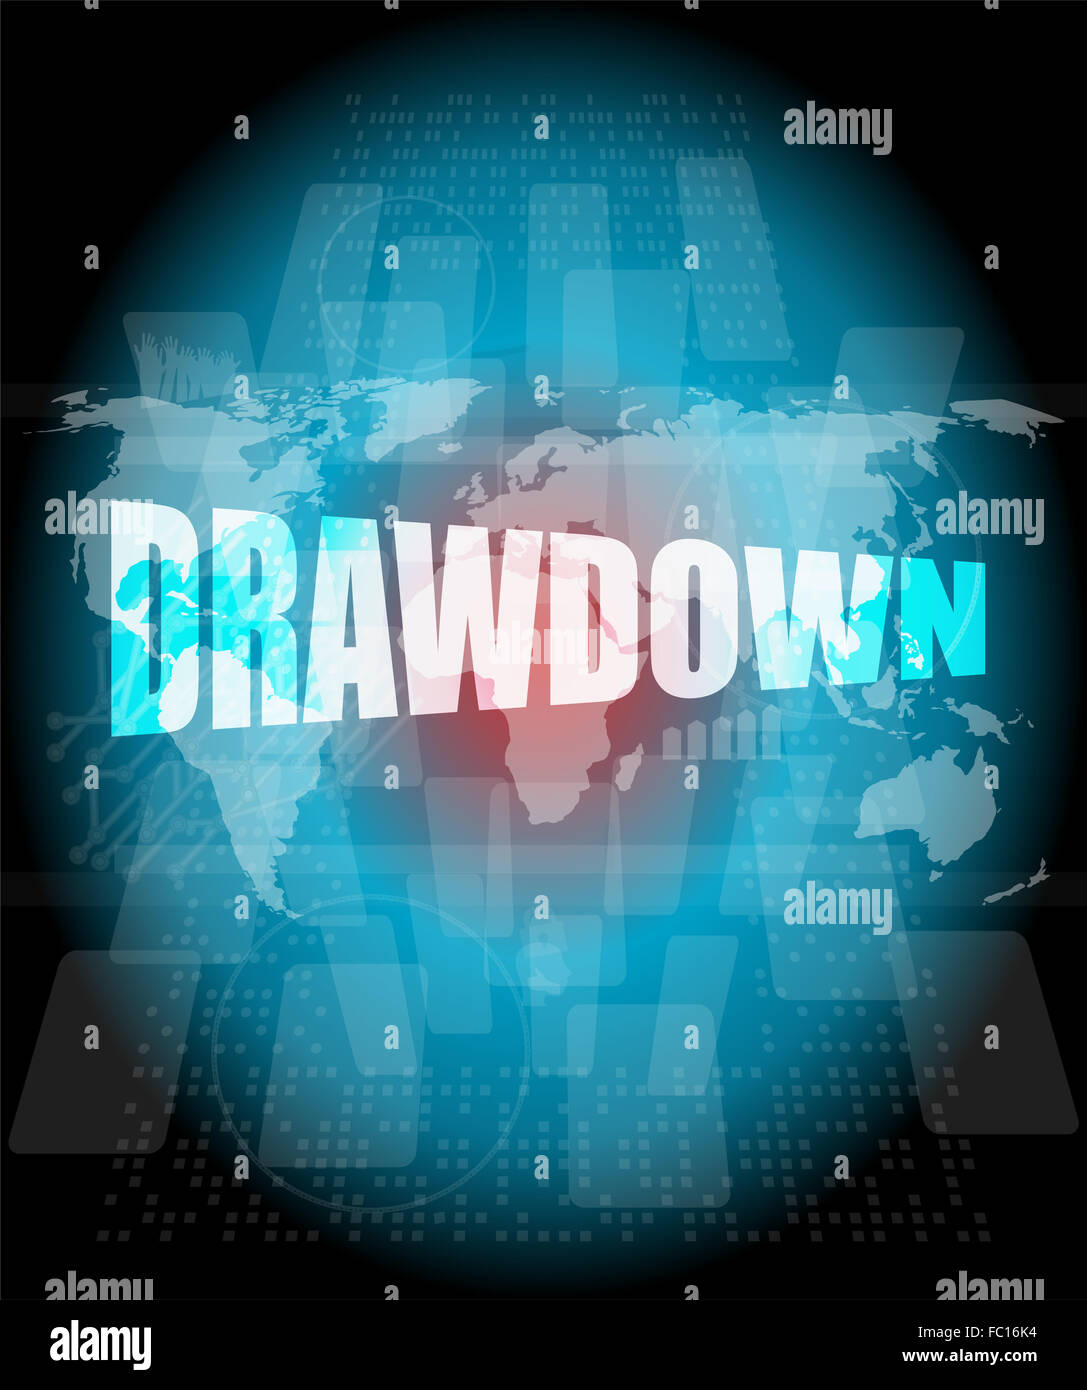 Drawdown word on digital screen Stock Photo